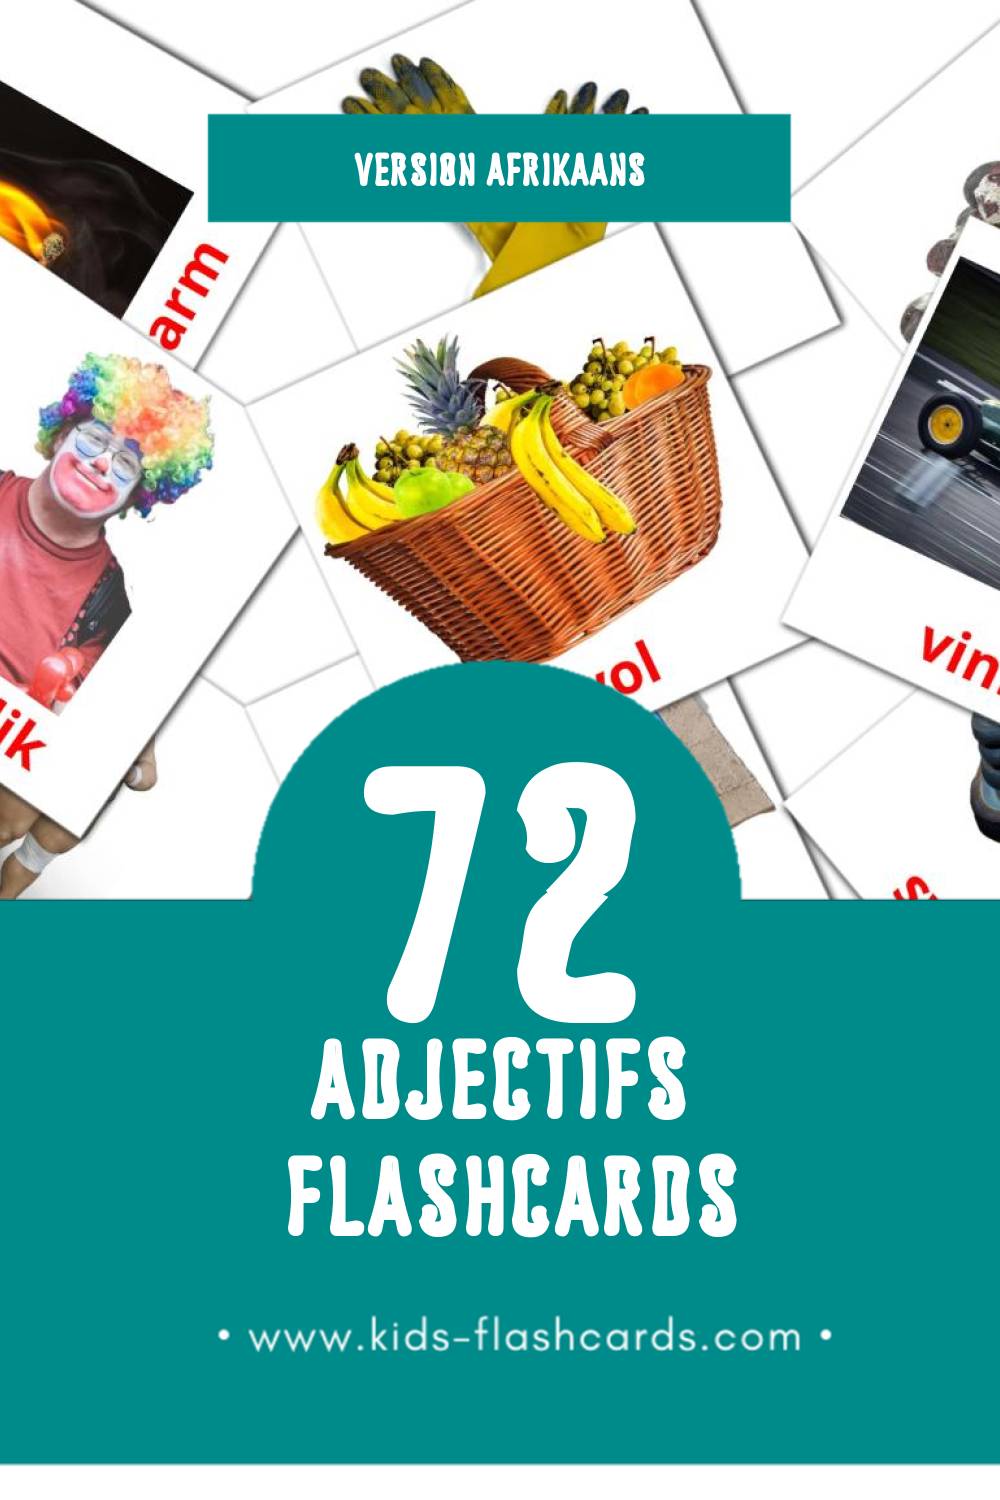 Flashcards Visual Byvoeglike naamwoorde pour les tout-petits (74 cartes en Afrikaans)